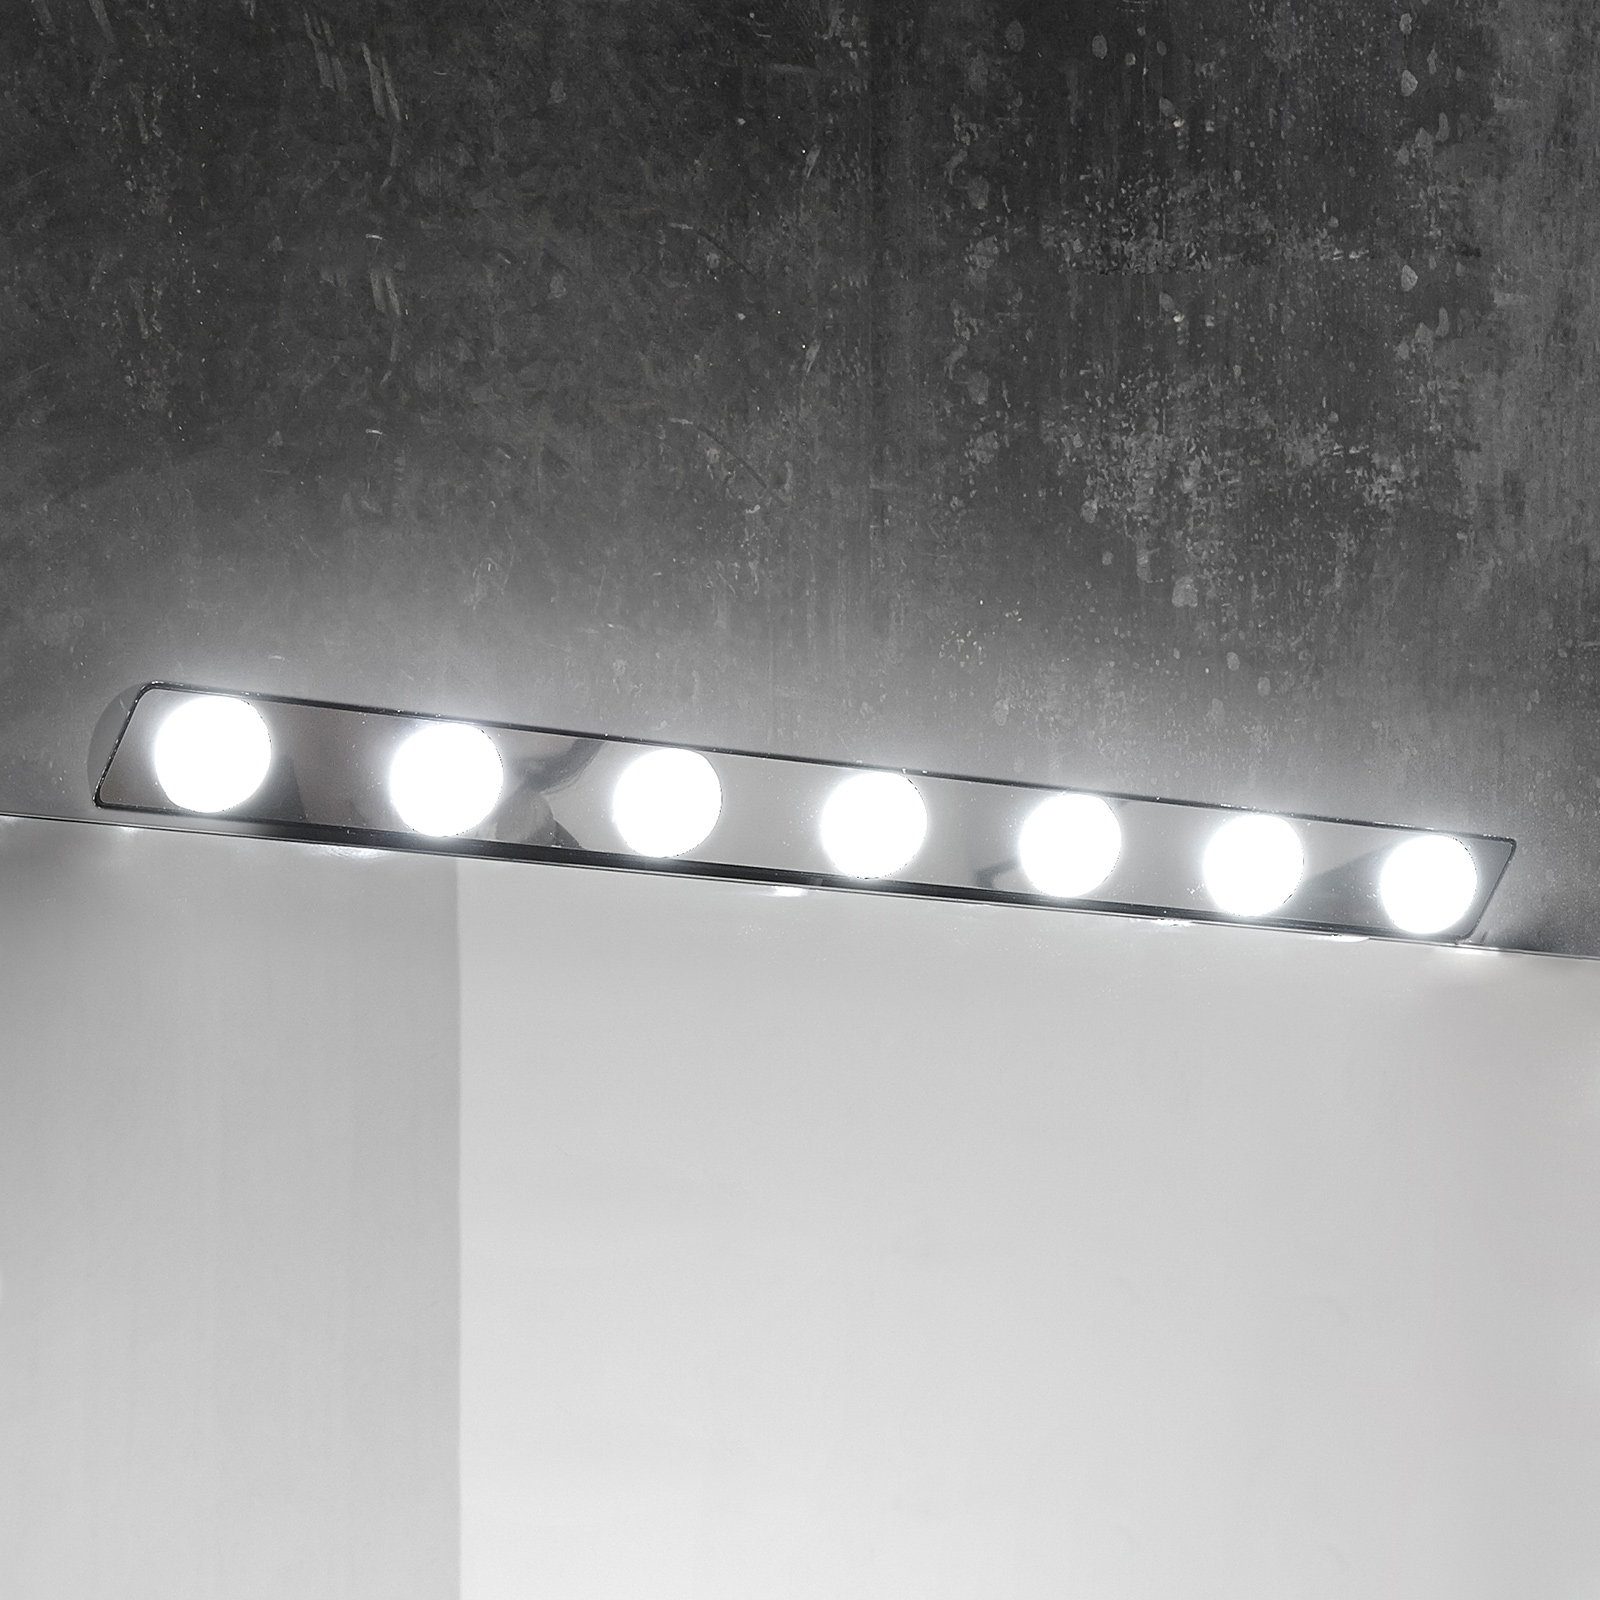 LED-spegellampa Hollywood, 85 cm 7 lampor